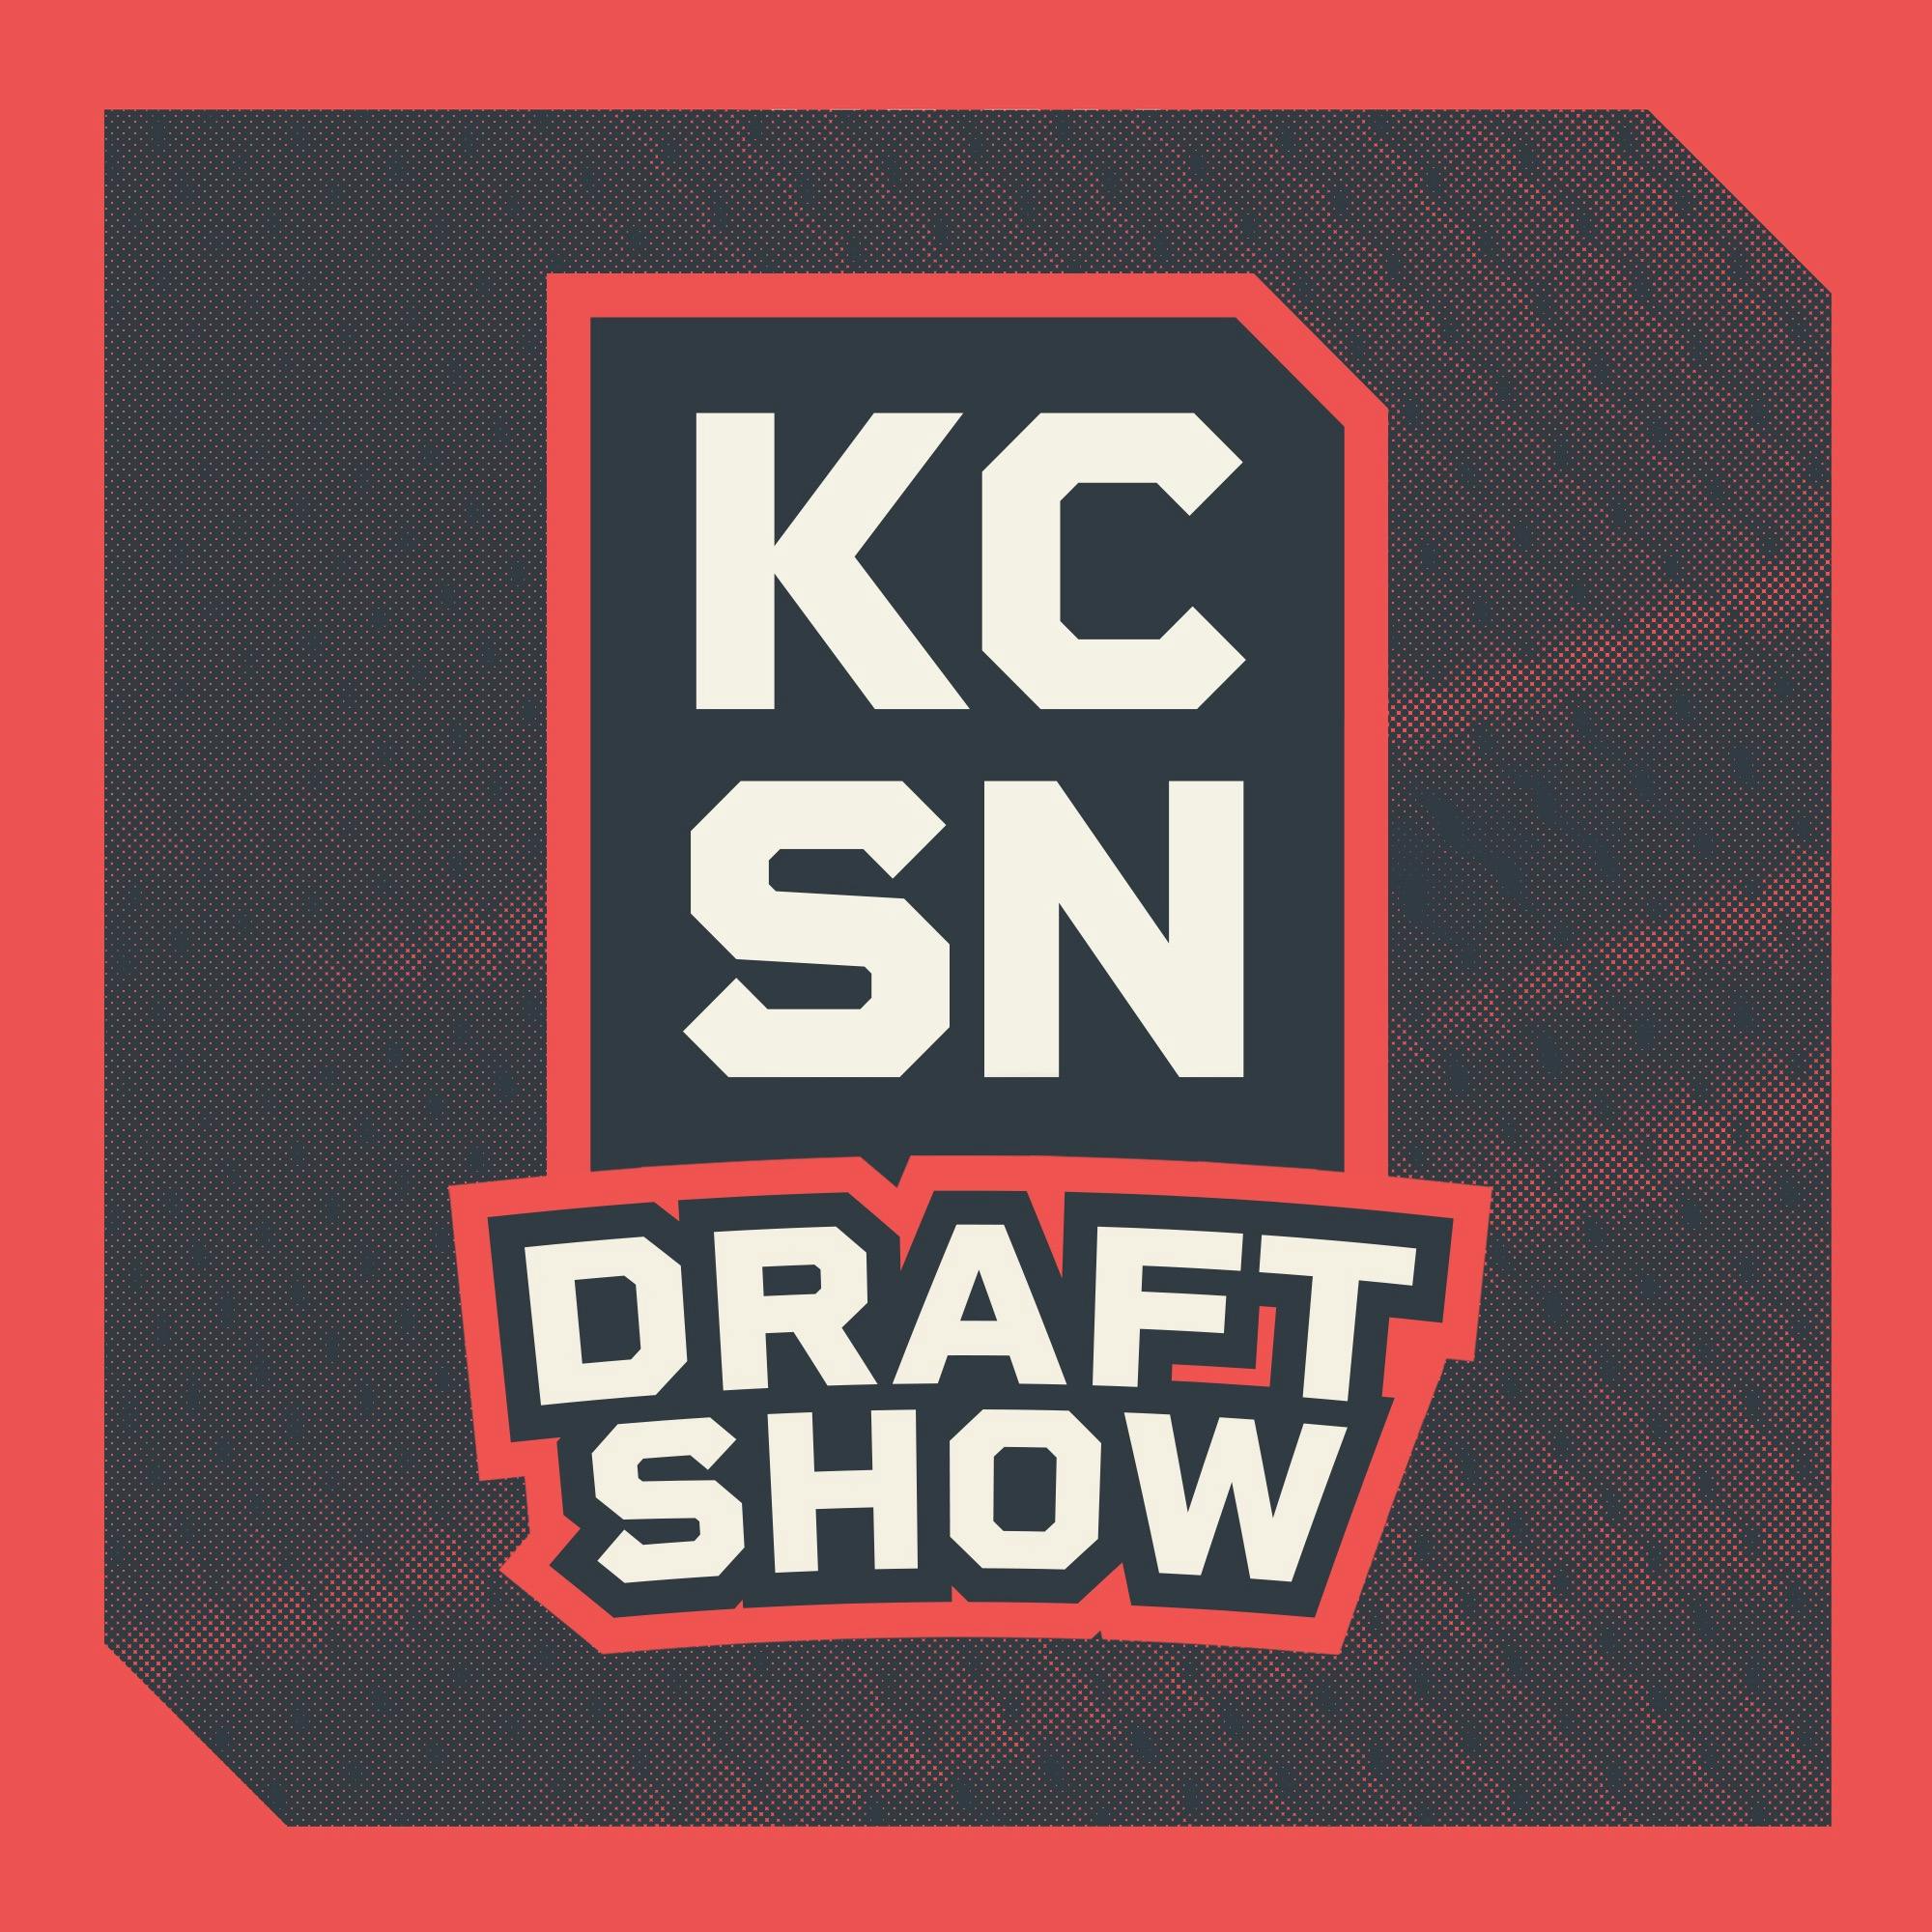 KCSN Draft Show 3/2: Brett Kollmann Discusses How Chiefs Can Reload in Free Agency, Draft